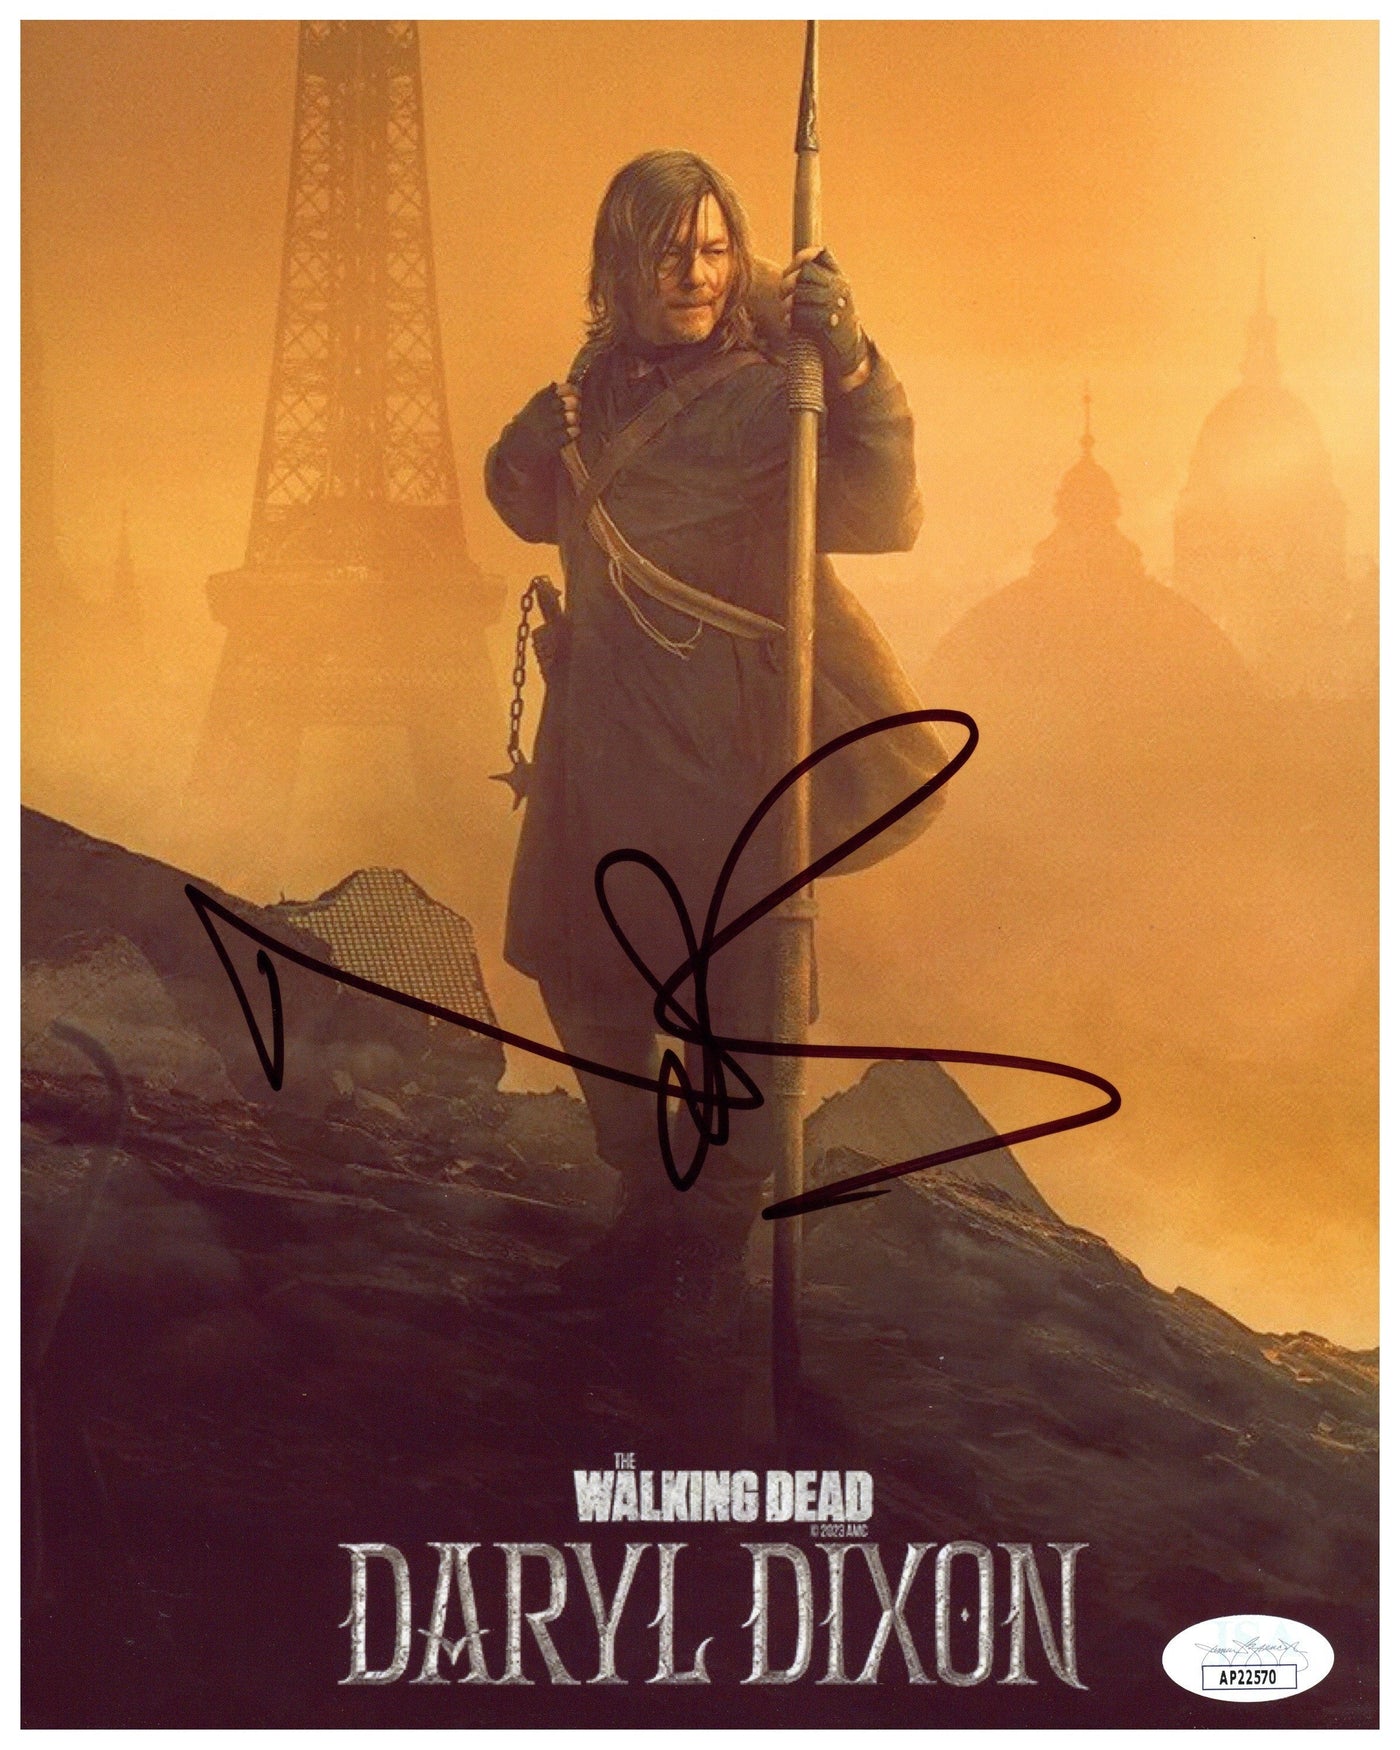 Norman Reedus Signed 8x10 Photo The Walking Dead Daryl Dixon Autographed JSA COA